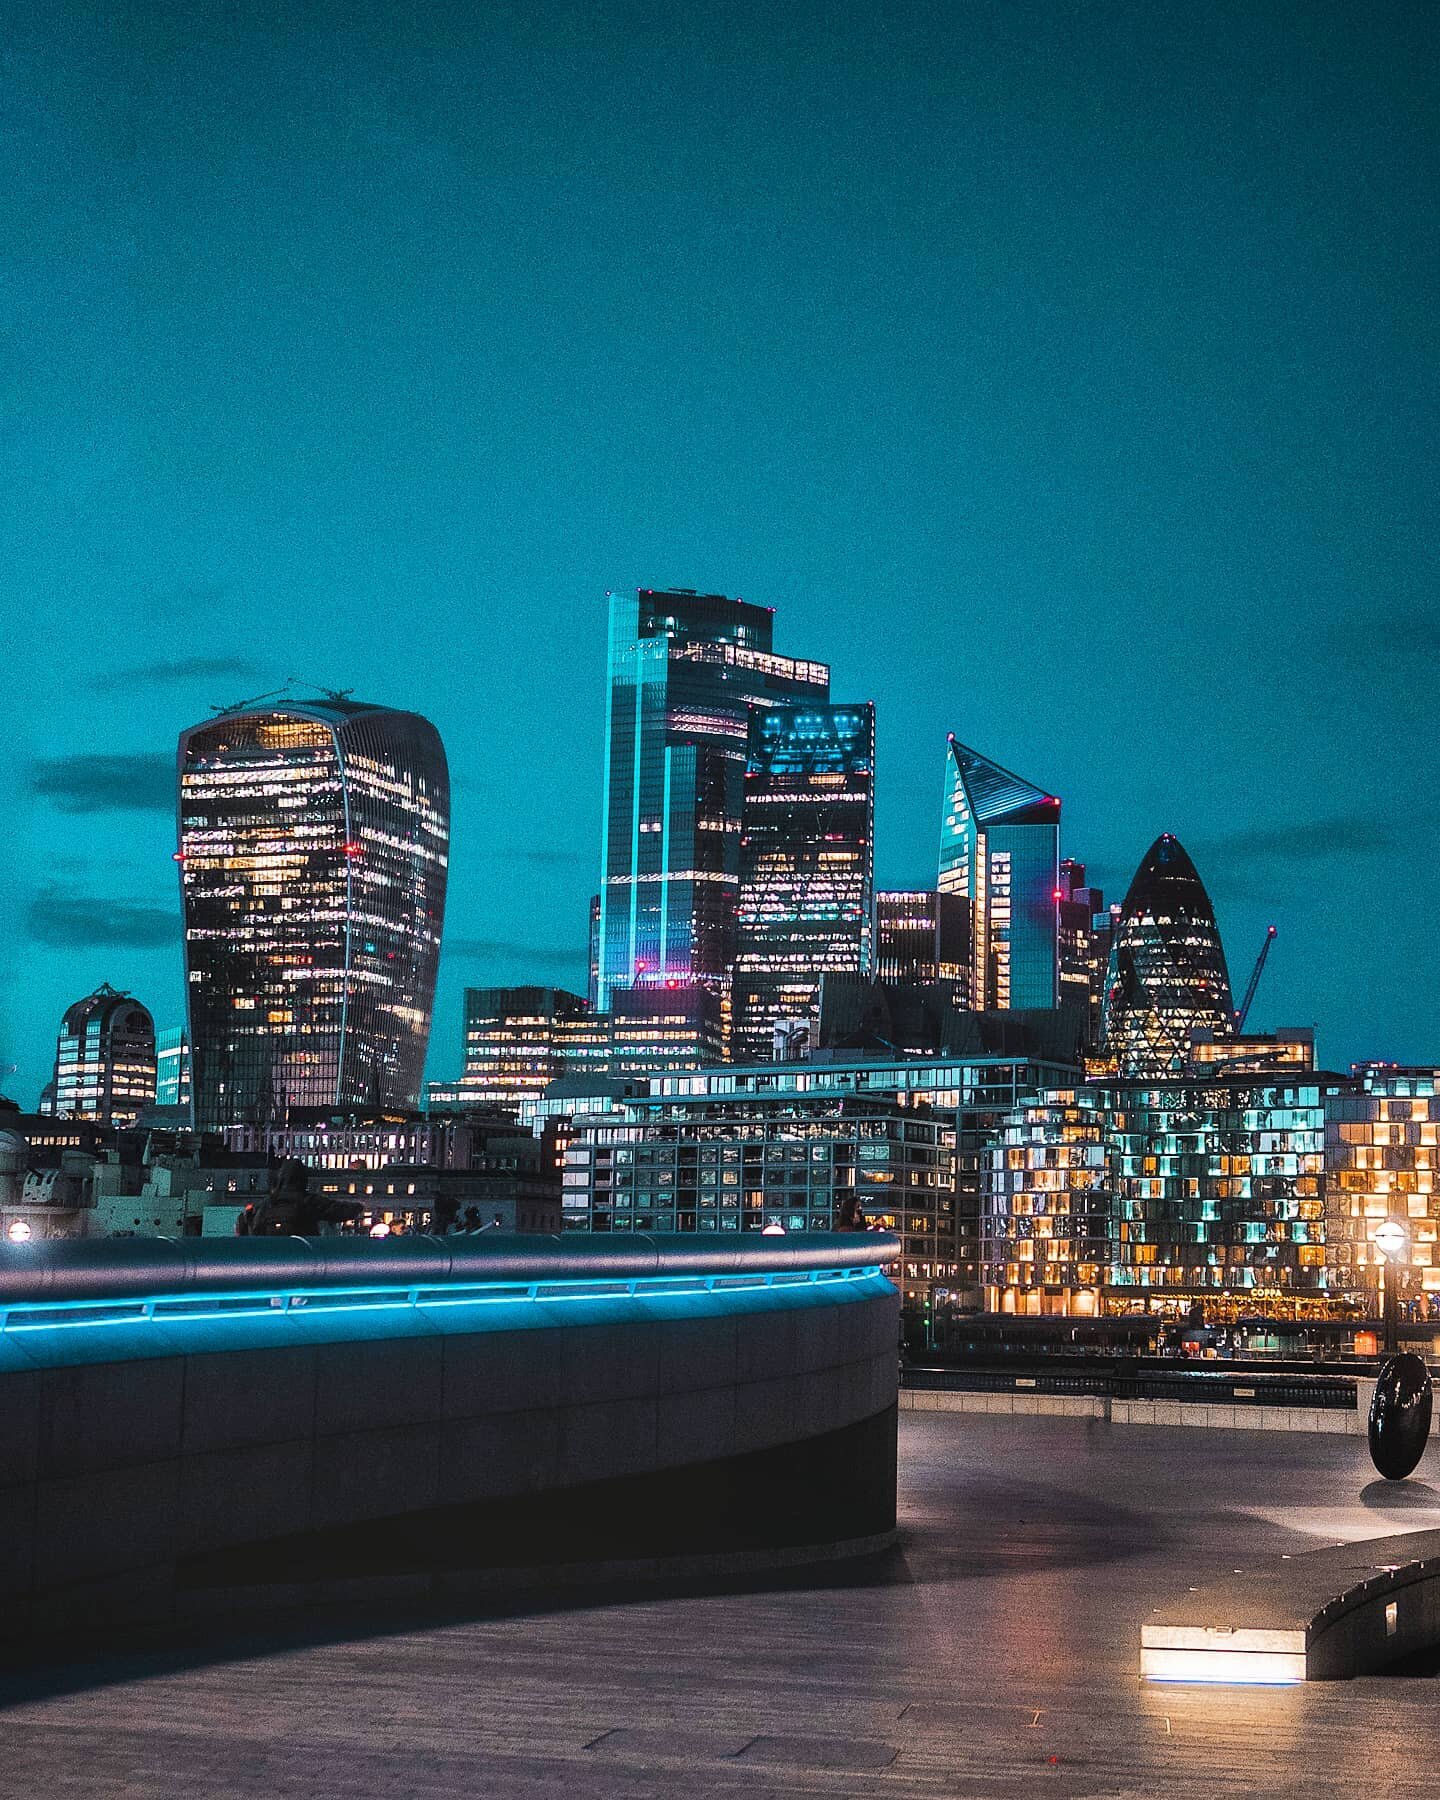 Pretty Lights, Pretty London 
.
.
📷  Neptune.Official 
#NeptuneVisuals 🌊🔱🌊
.
.
#london #londonphotographer 
#metroldn #uk_shooters #lights 
#citylights #creatives #potd📸 
#bluesky #ukphotographer #vibe
#portraituk #visuallondon #visual #architec